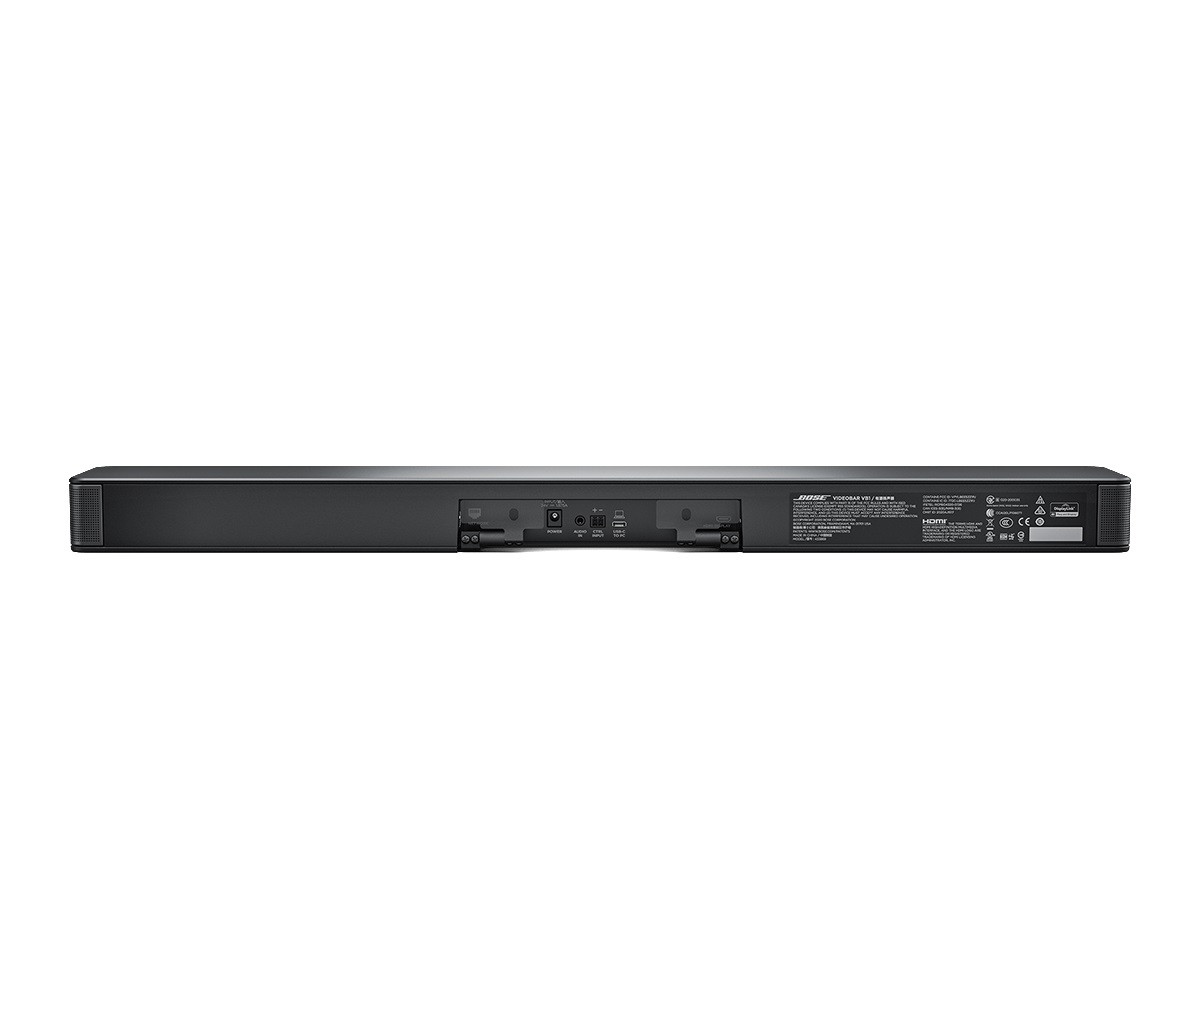 Bose-Videobar-VB1-All-in-One-USB-conferentiesysteem-8MP-USB-C-5x-zoom-123-FoV-UHD-2160p